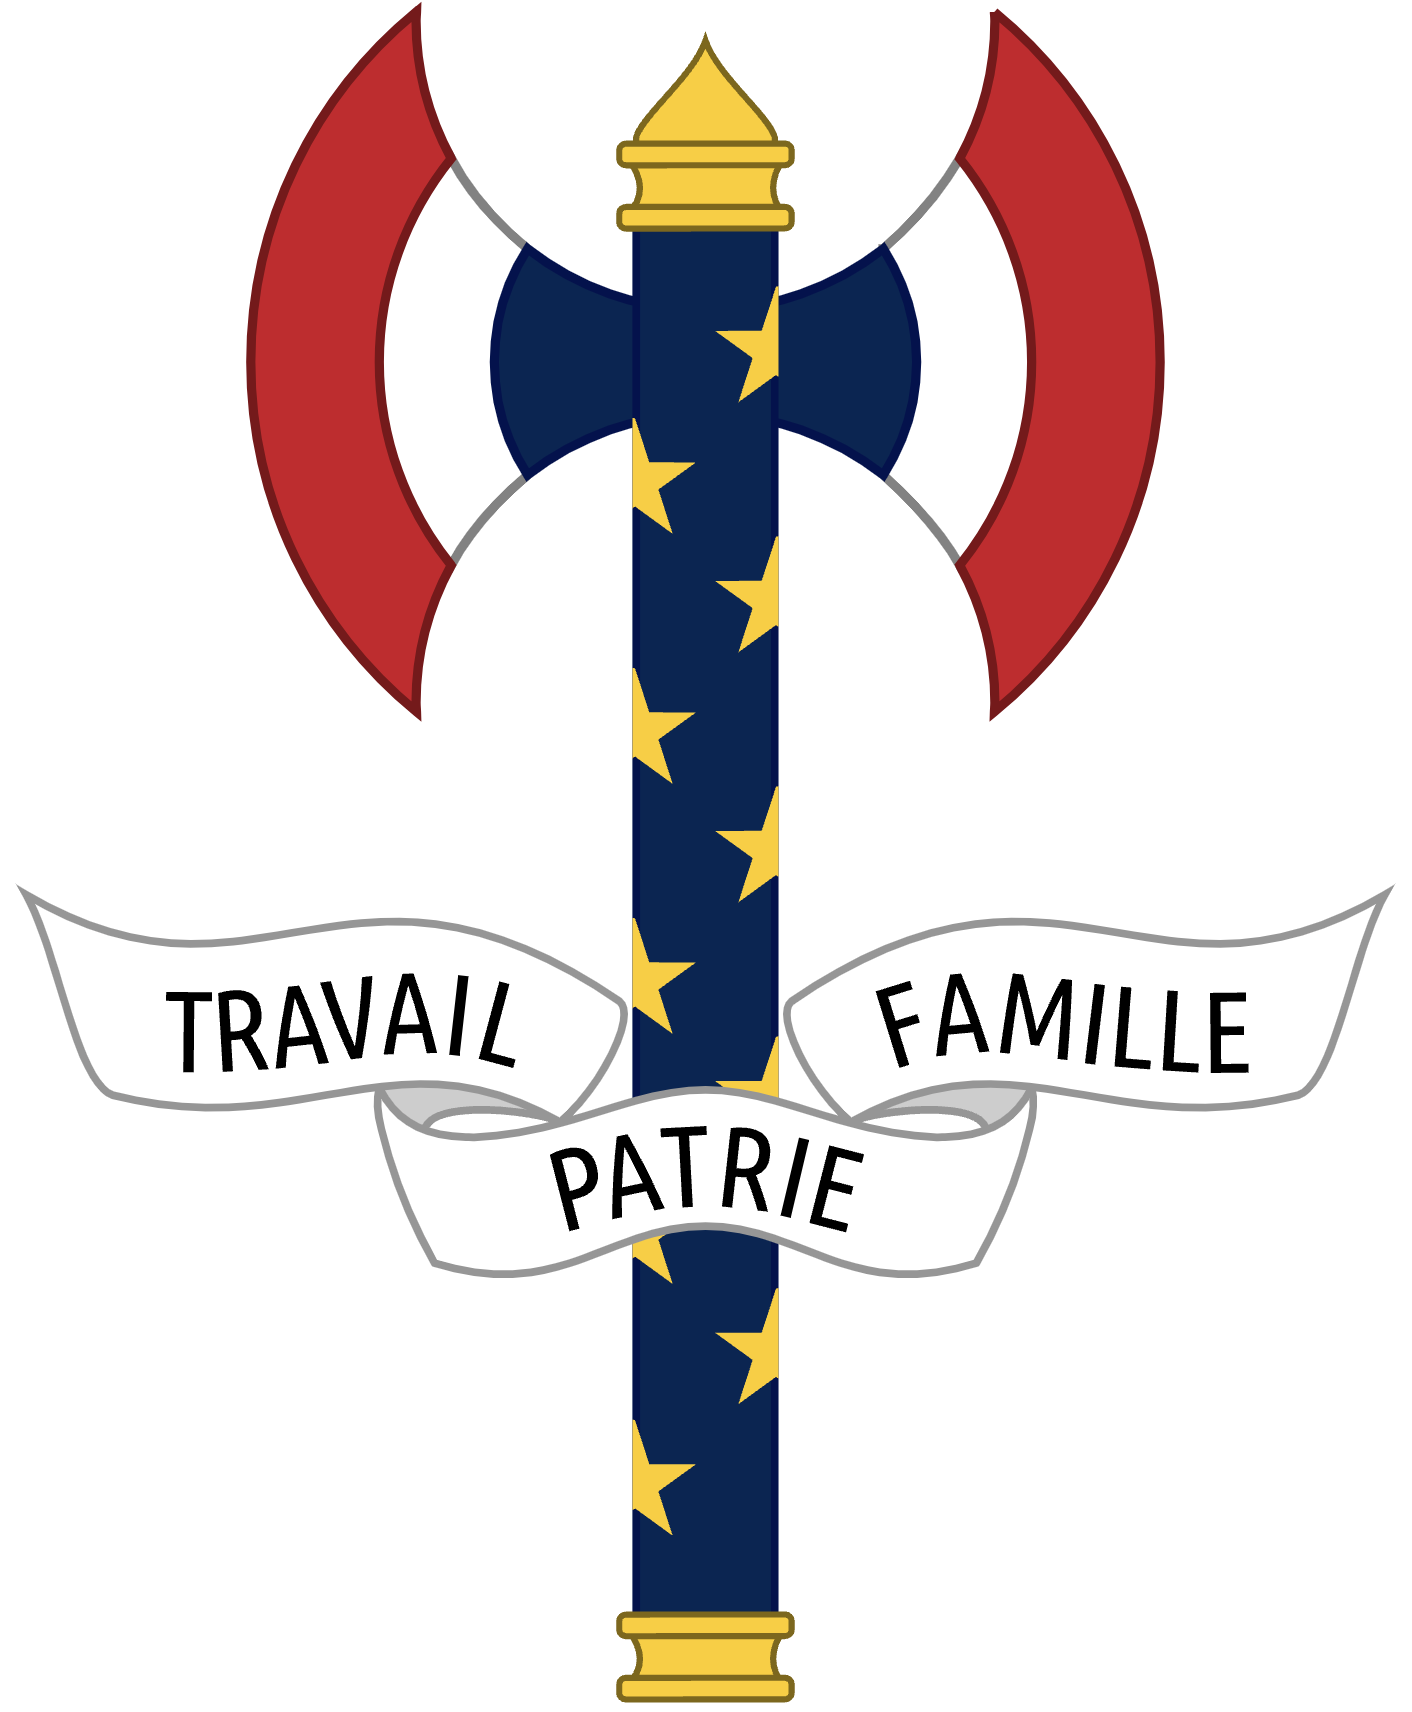 Mareşal Pétain'in resmi amblemi ve Vichy rejiminin de facto arması.